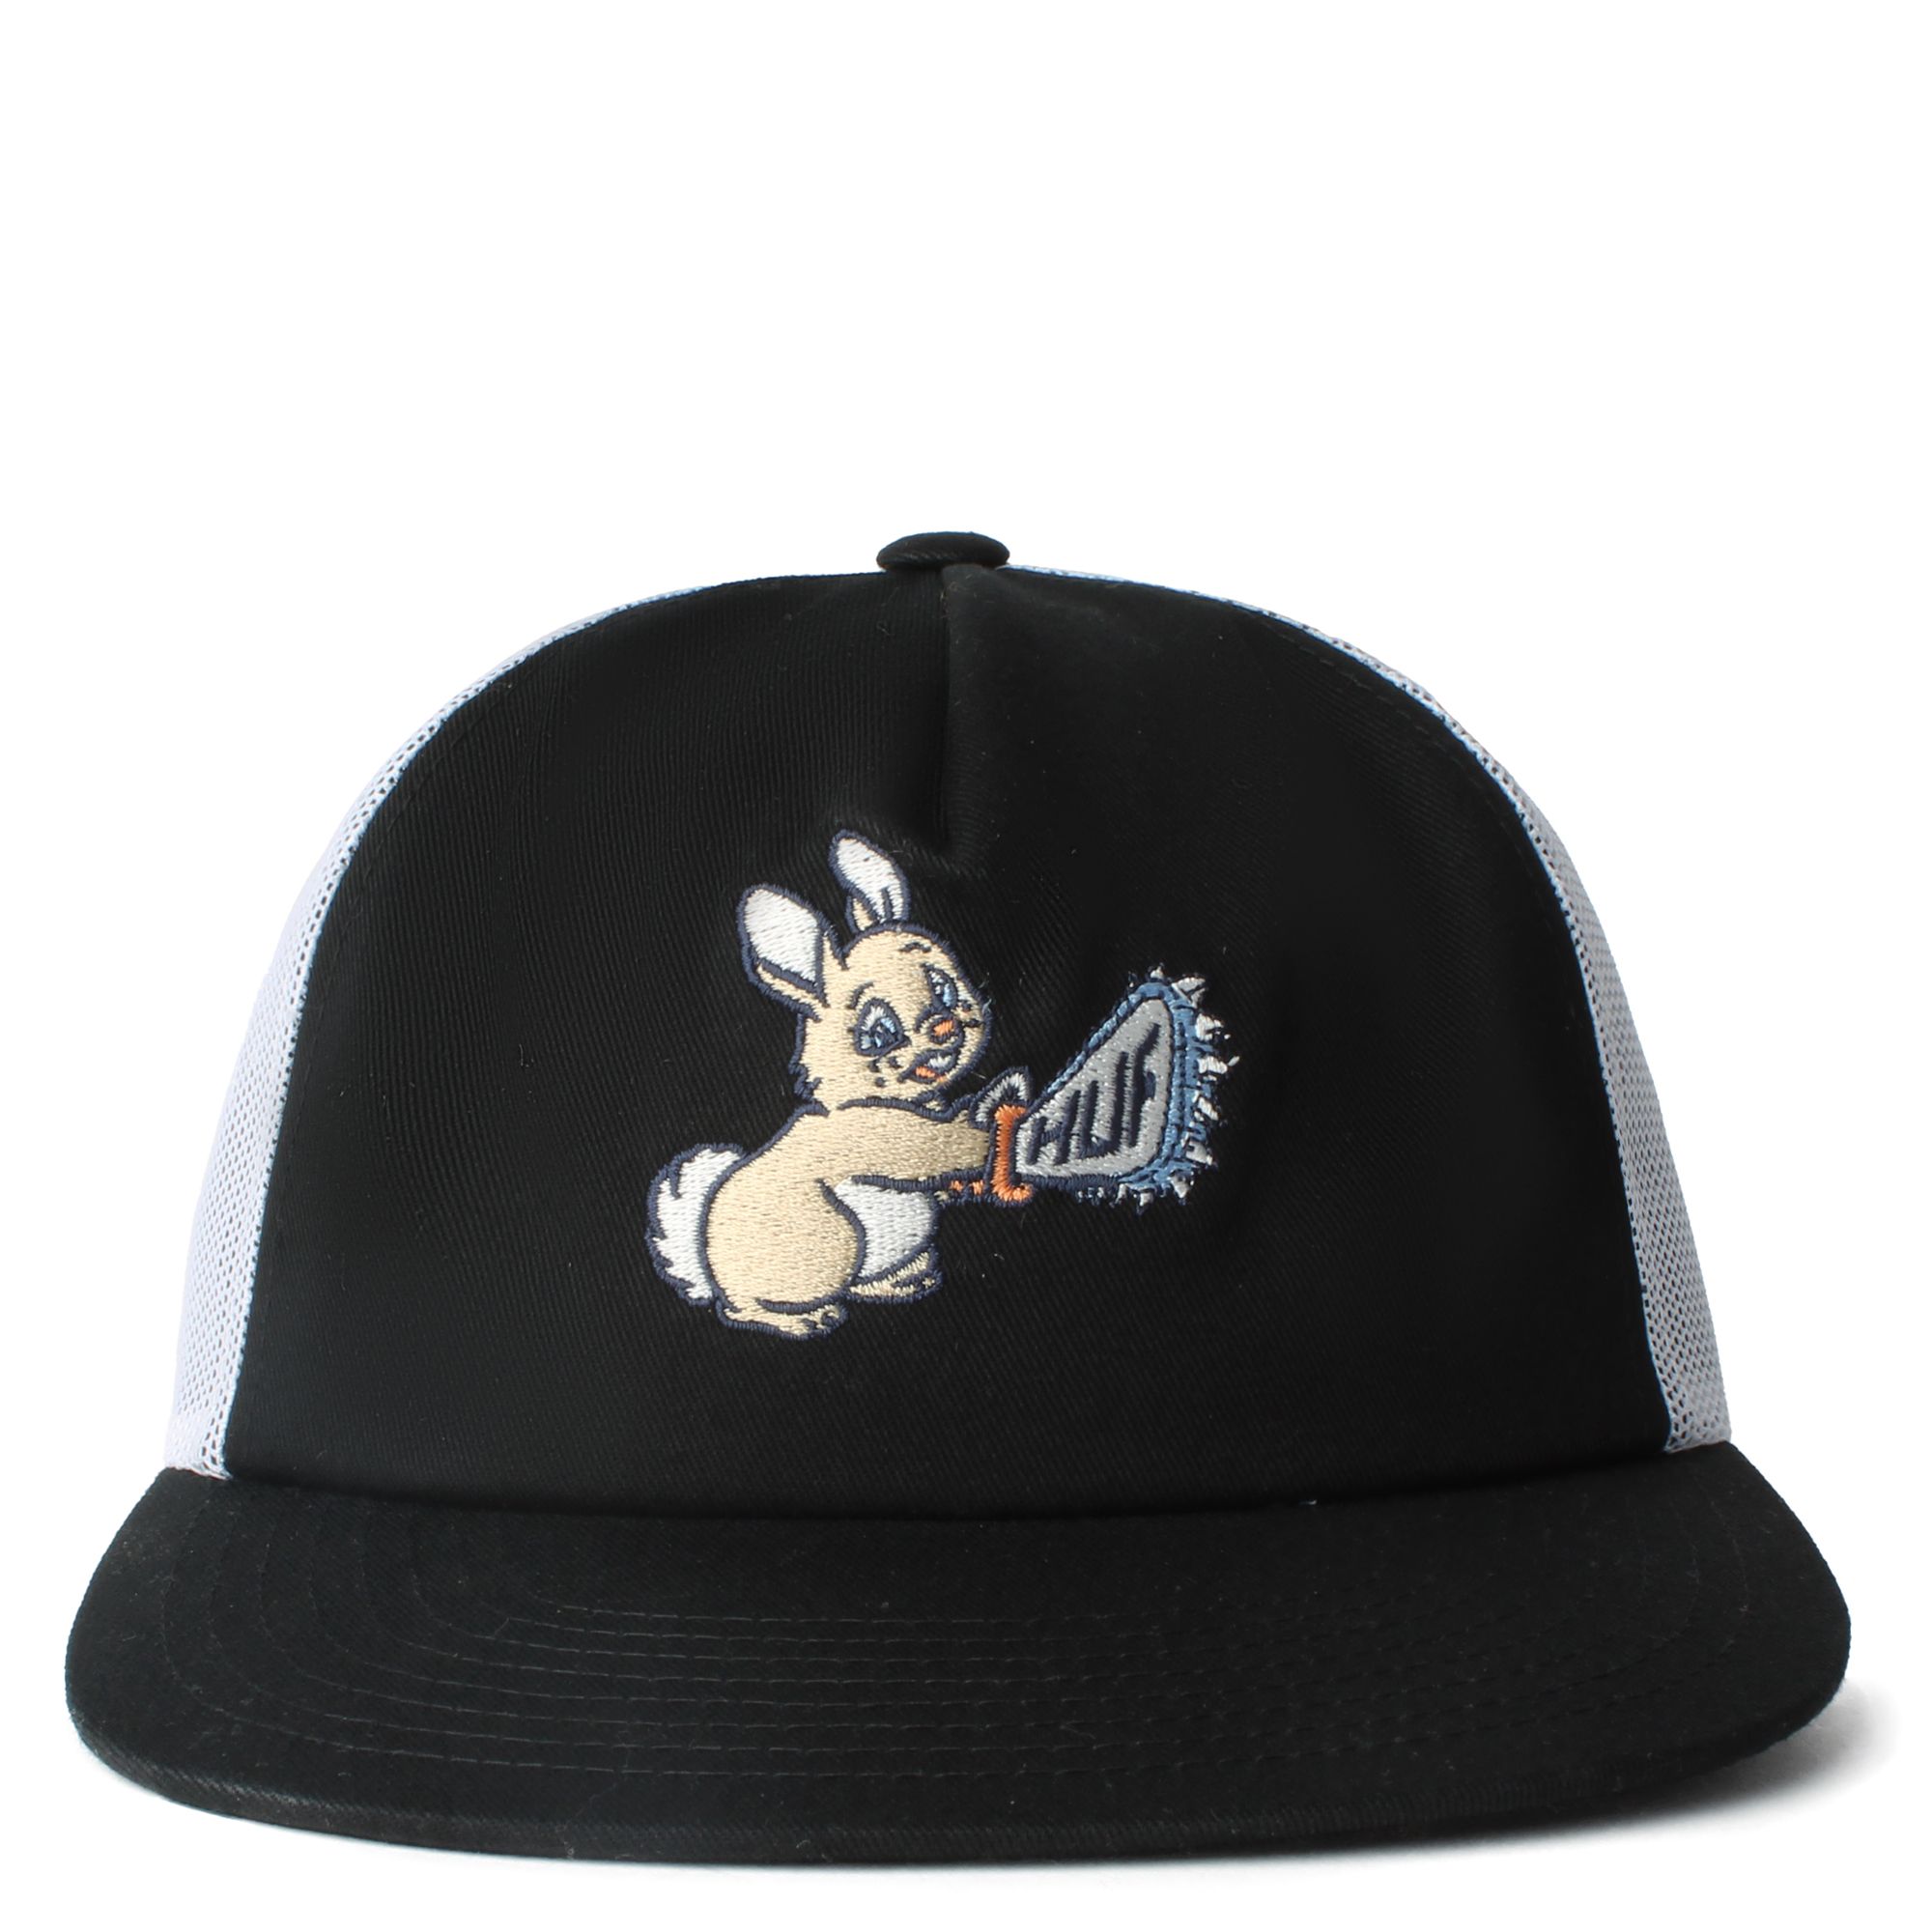 Stitched Unique Bad Bunny Dodgers Jersey - Men's Medium for